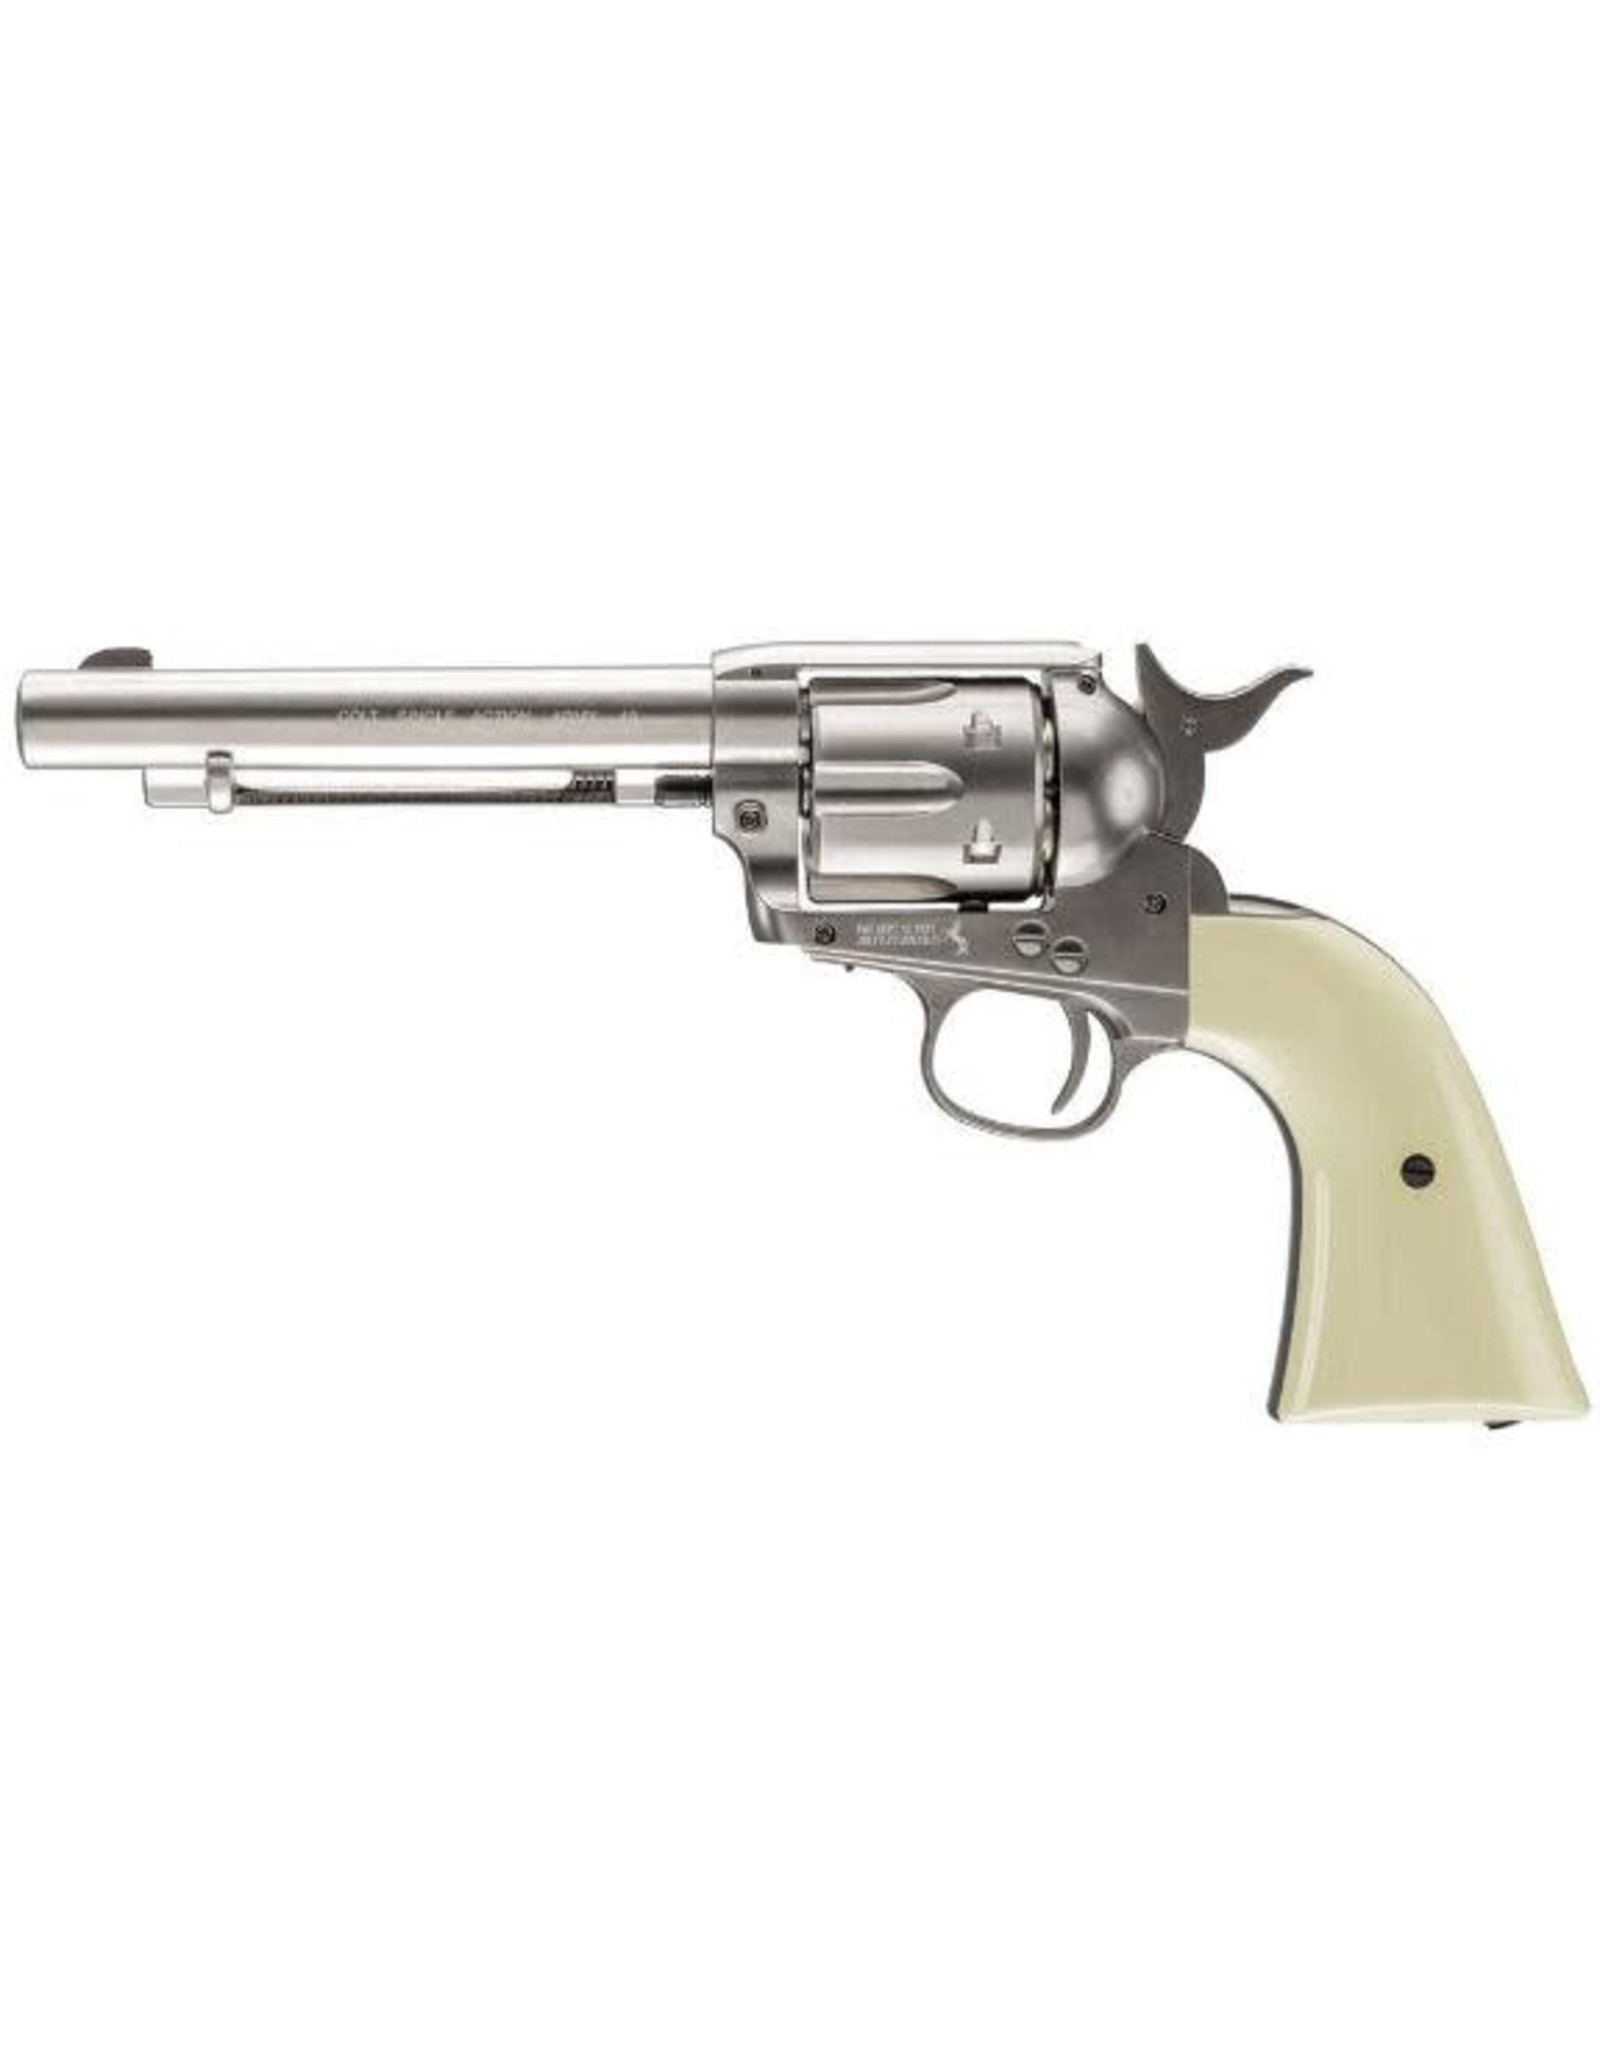 Colt Colt Peacemaker .177 BB 410FPS Single-Action Army